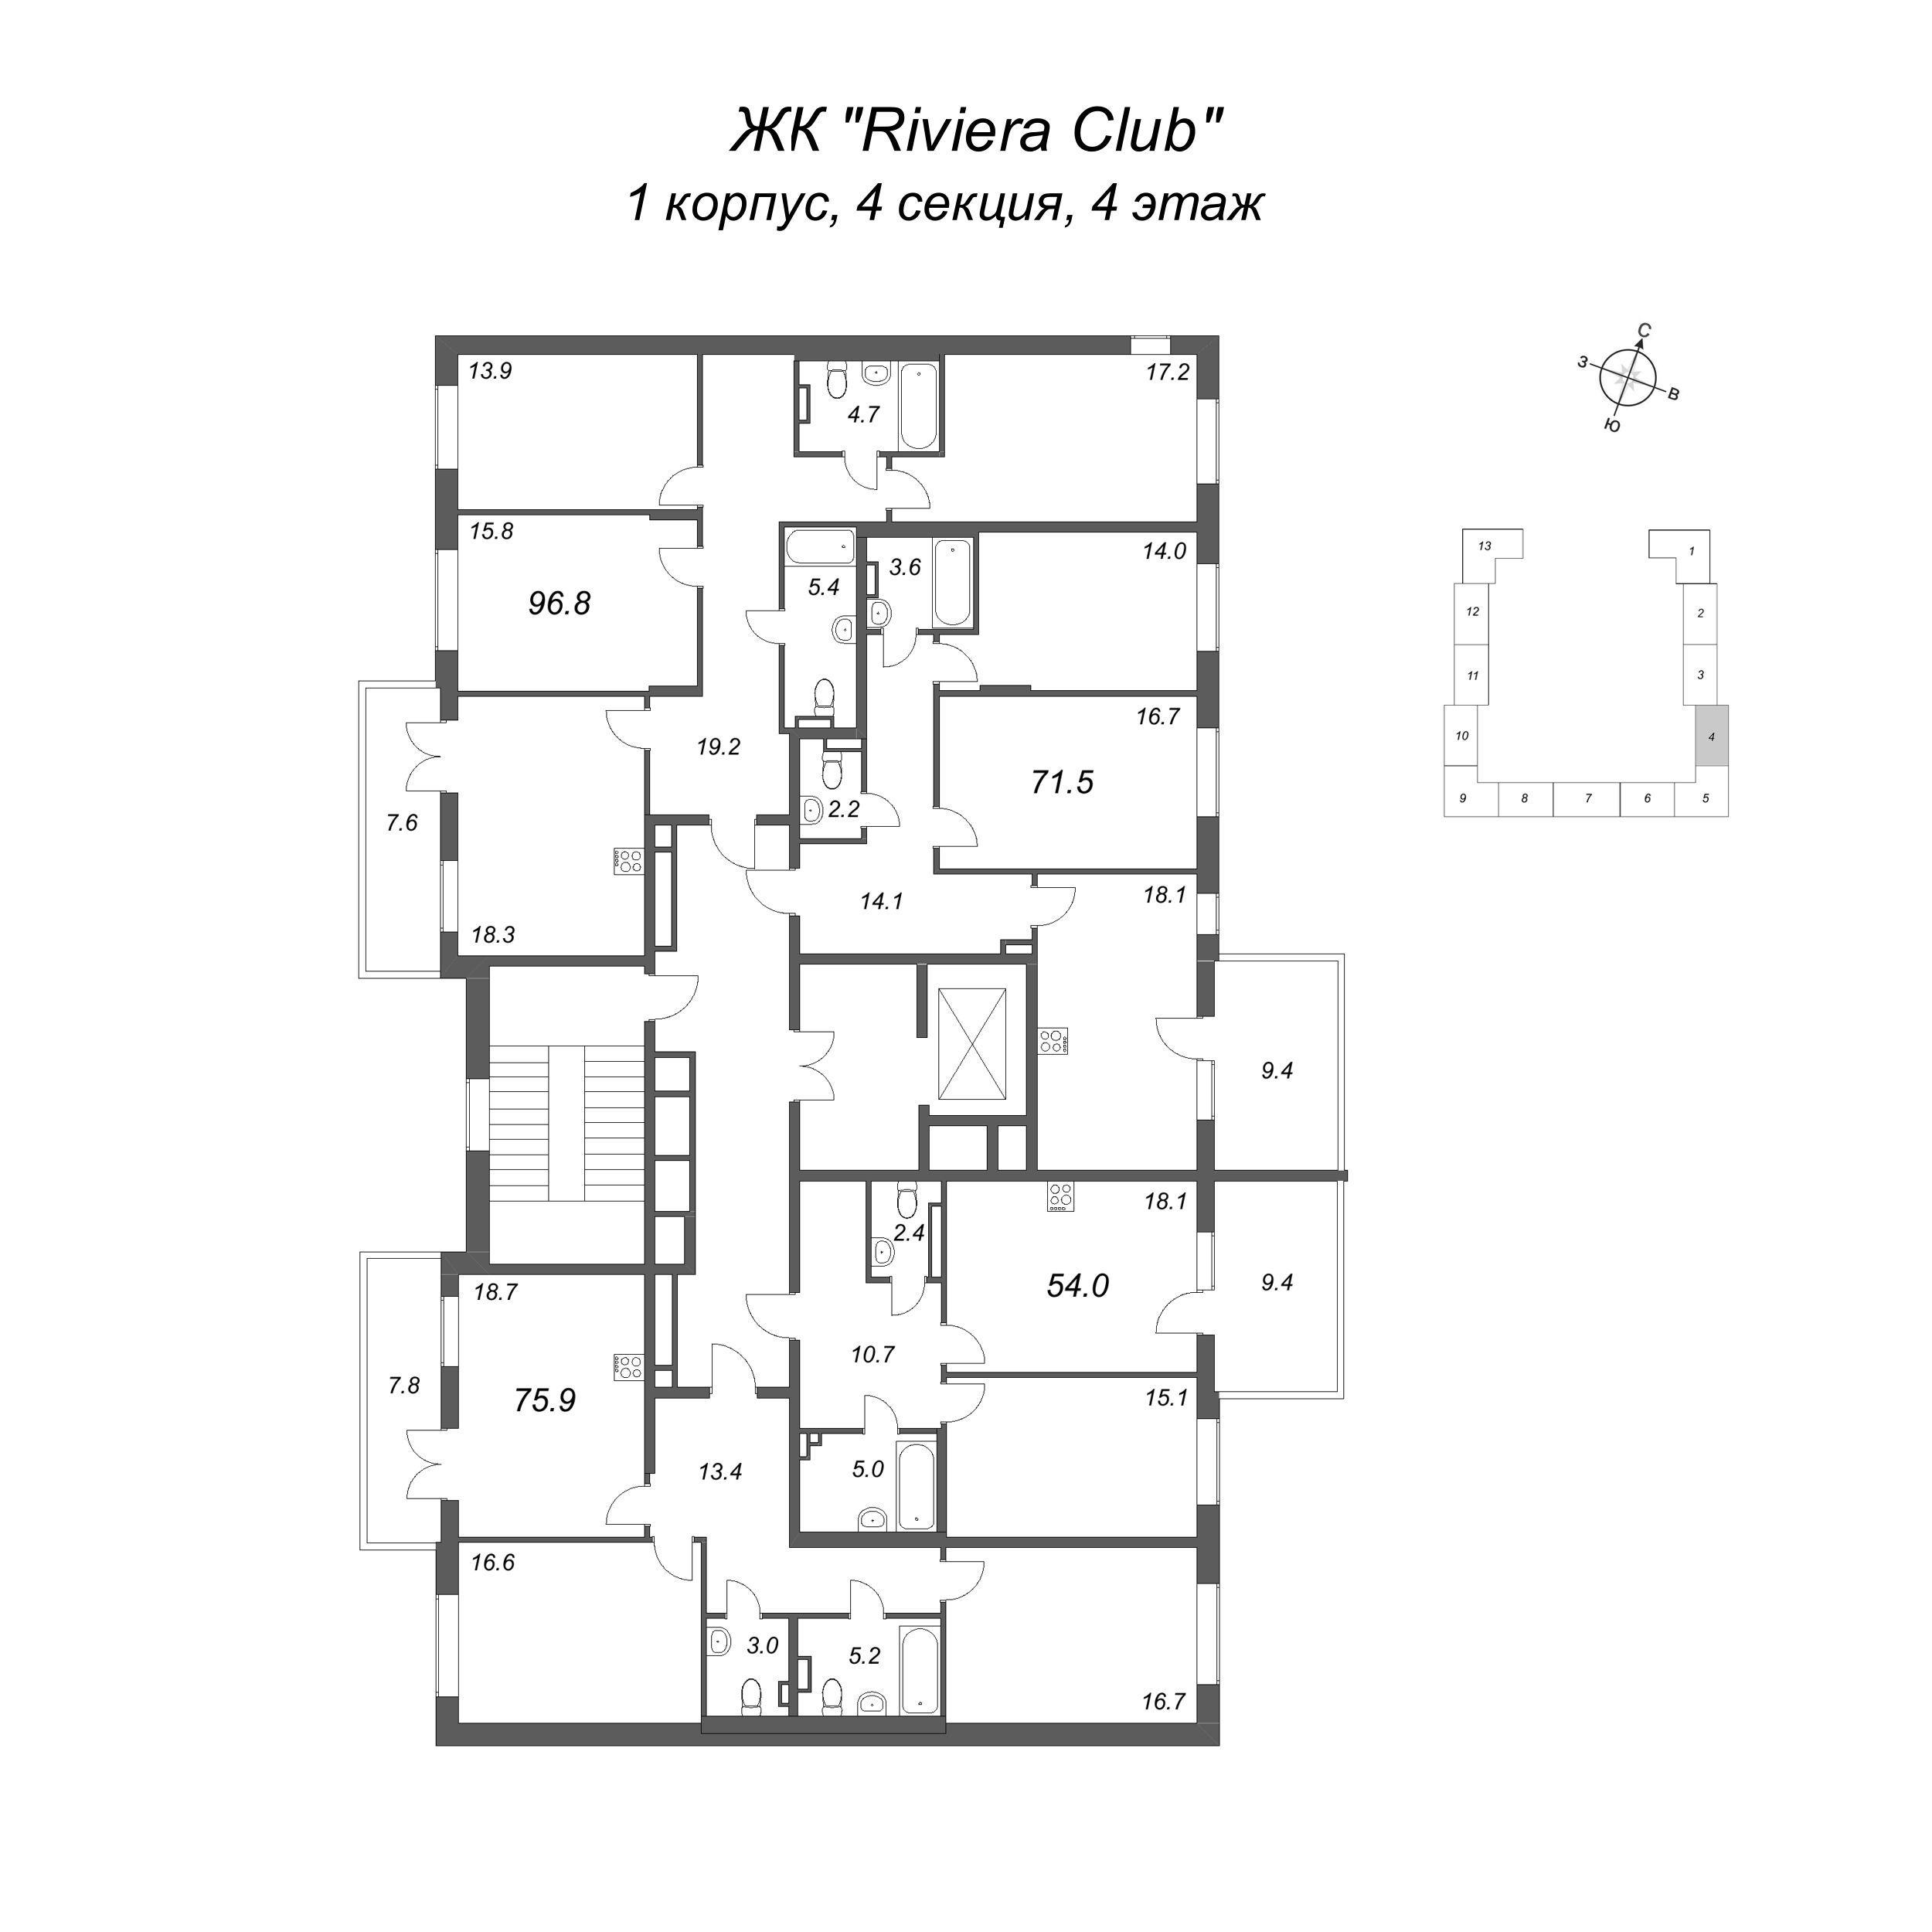 4-комнатная (Евро) квартира, 96.8 м² в ЖК "Riviera Club" - планировка этажа